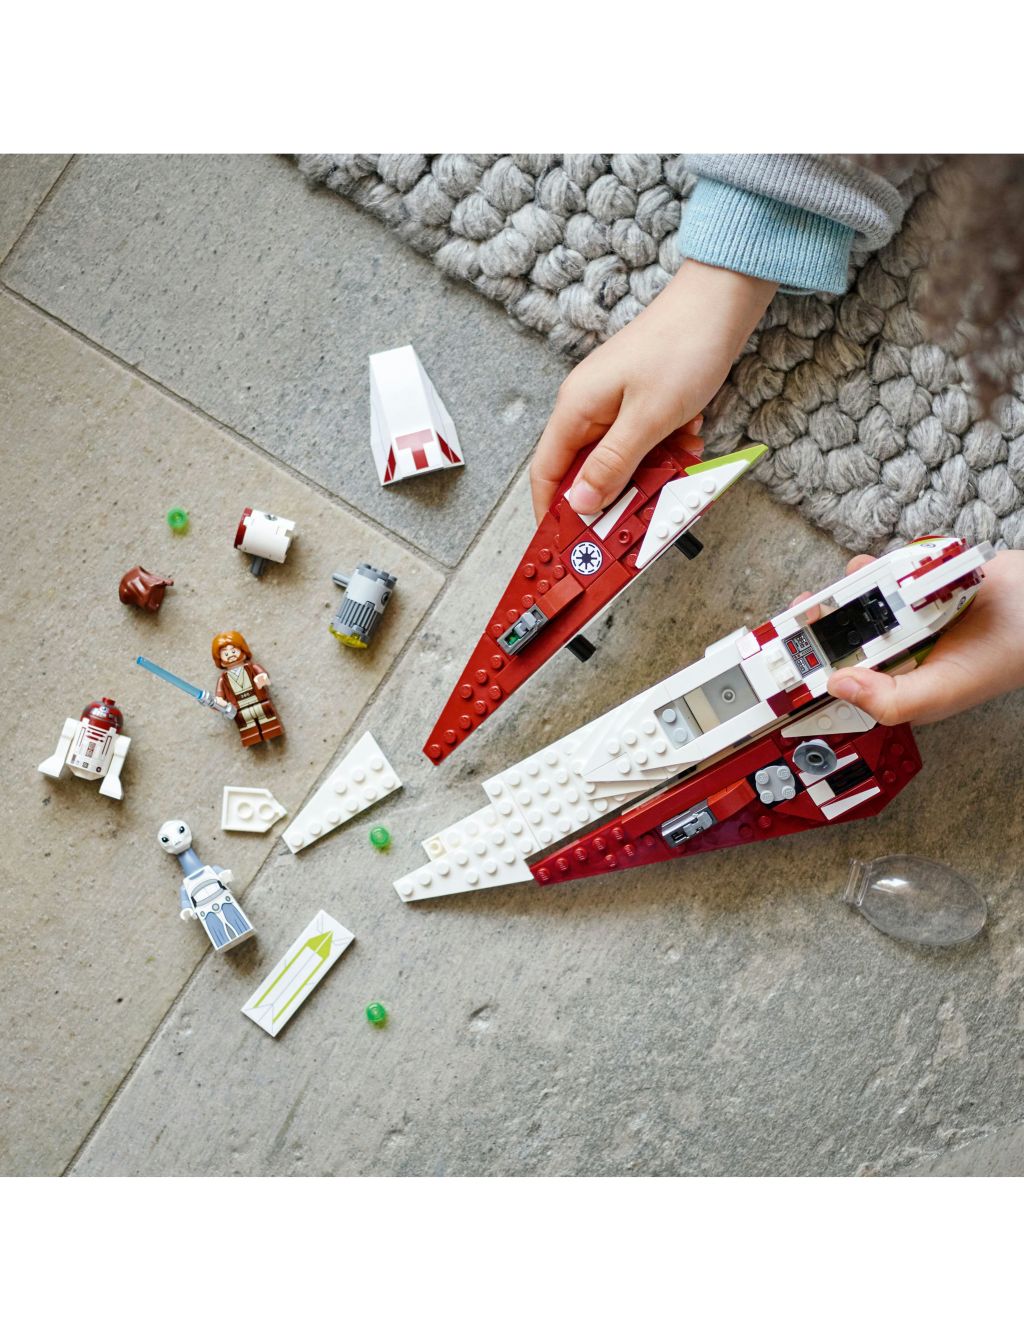 LEGO® Star Wars™ Obi-Wan Kenobi’s Jedi Starfighter™ 75333 (7+ Yrs) 1 of 4